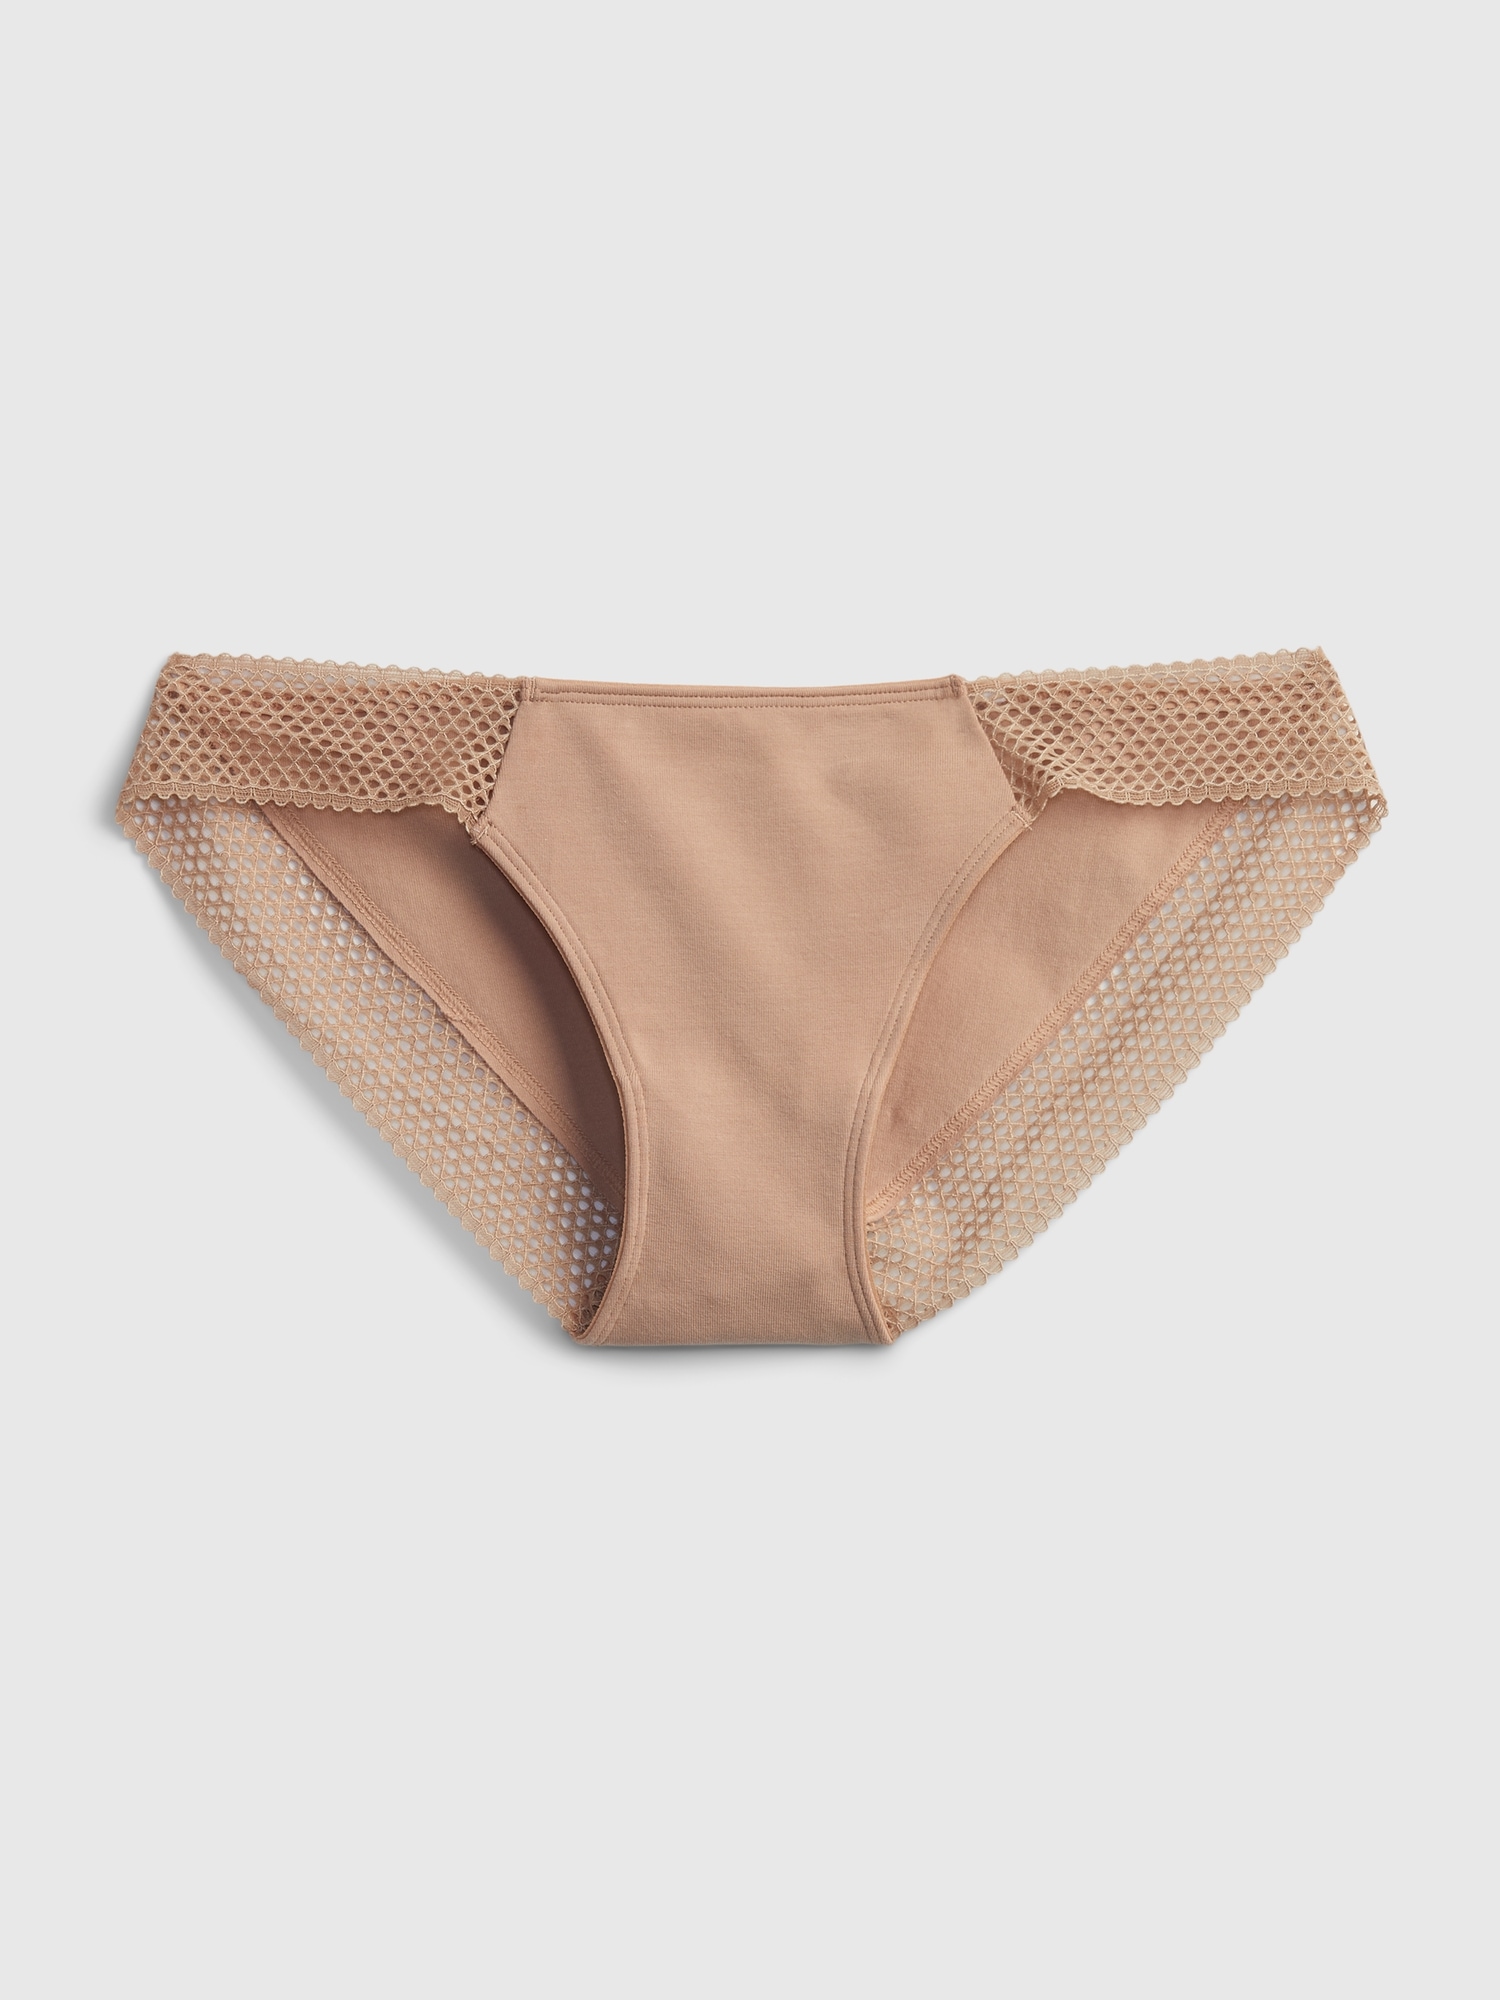 Stretch Lace Underwear